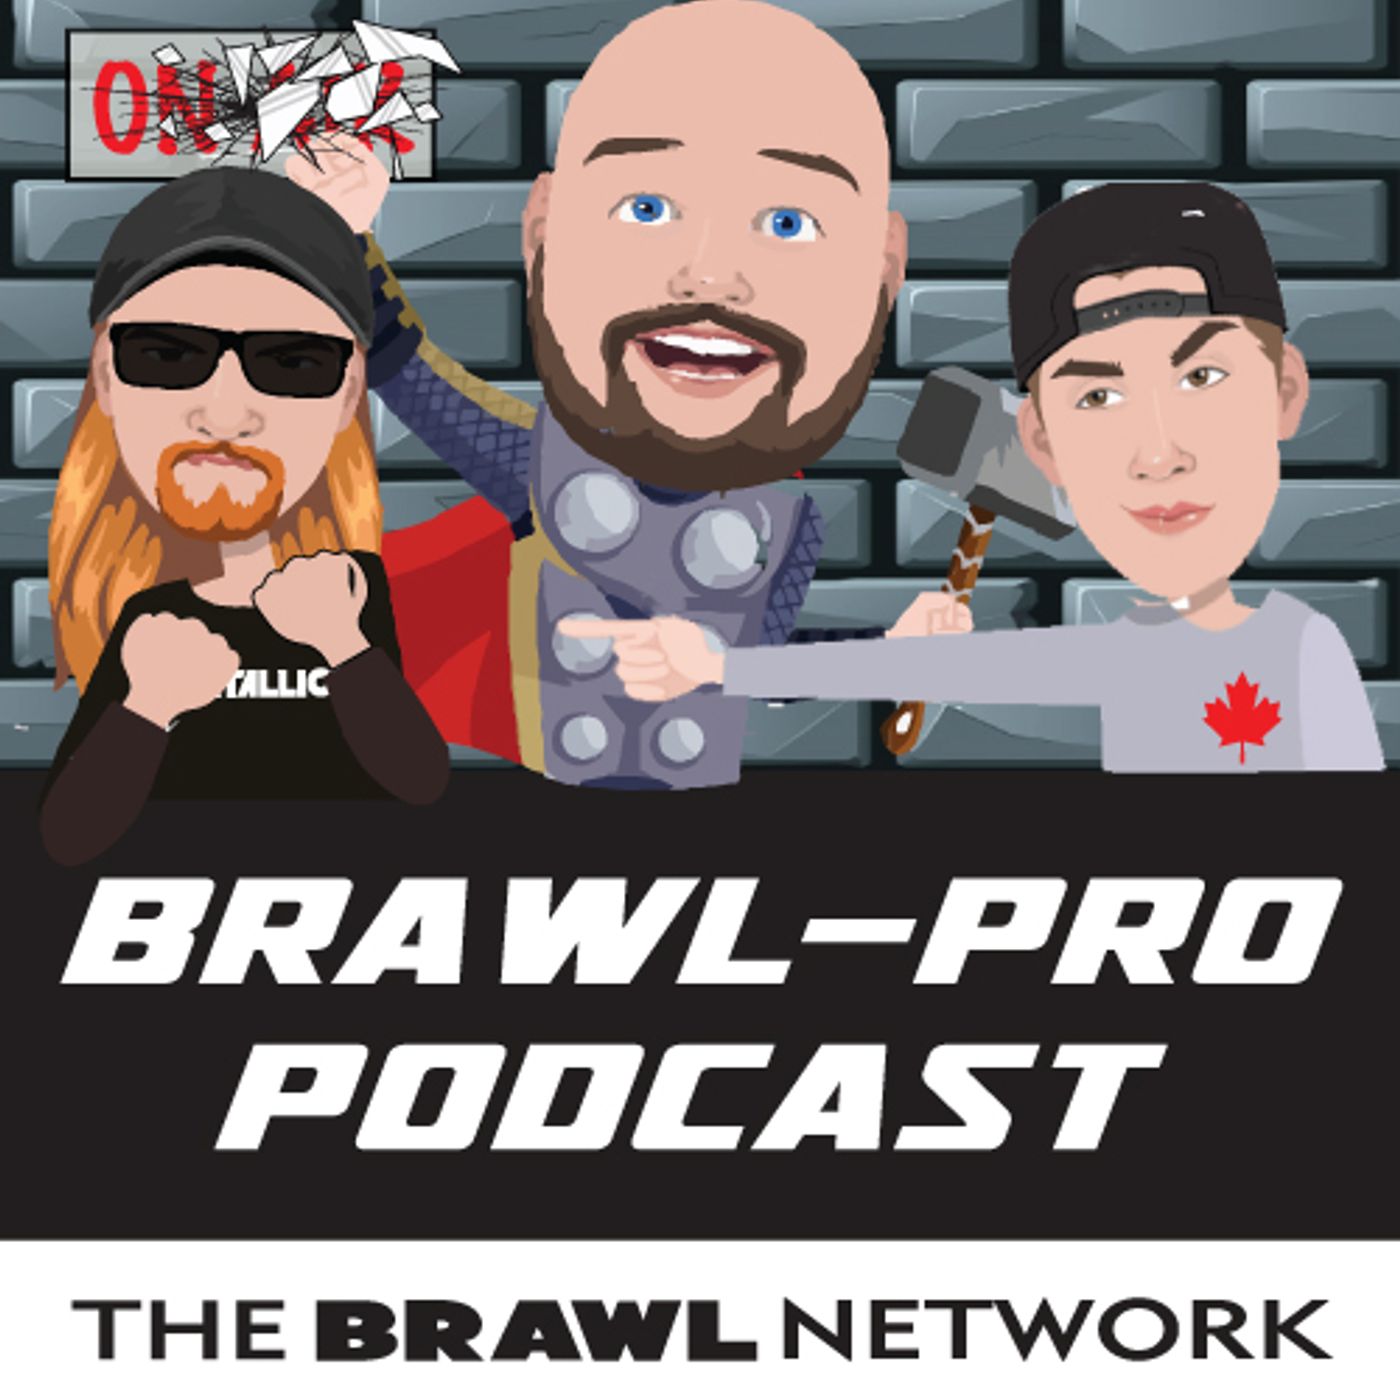 Brawl-Pro Football Podcast